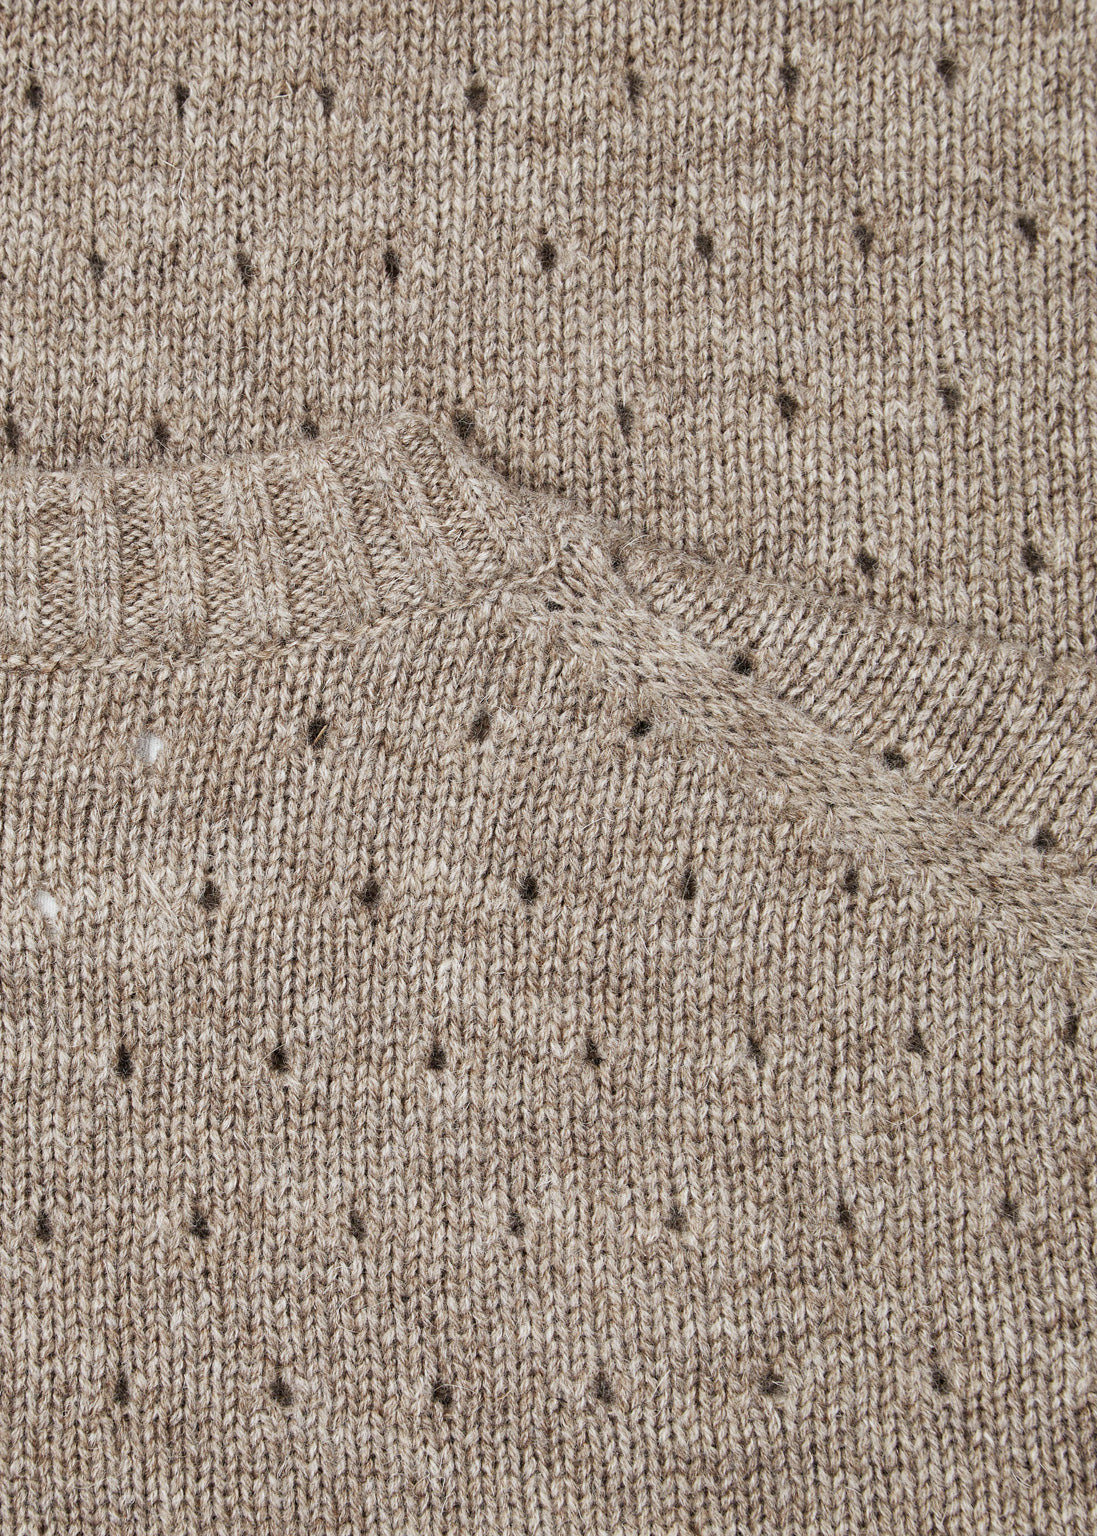 Saga dot wool sweater | Pure Soil